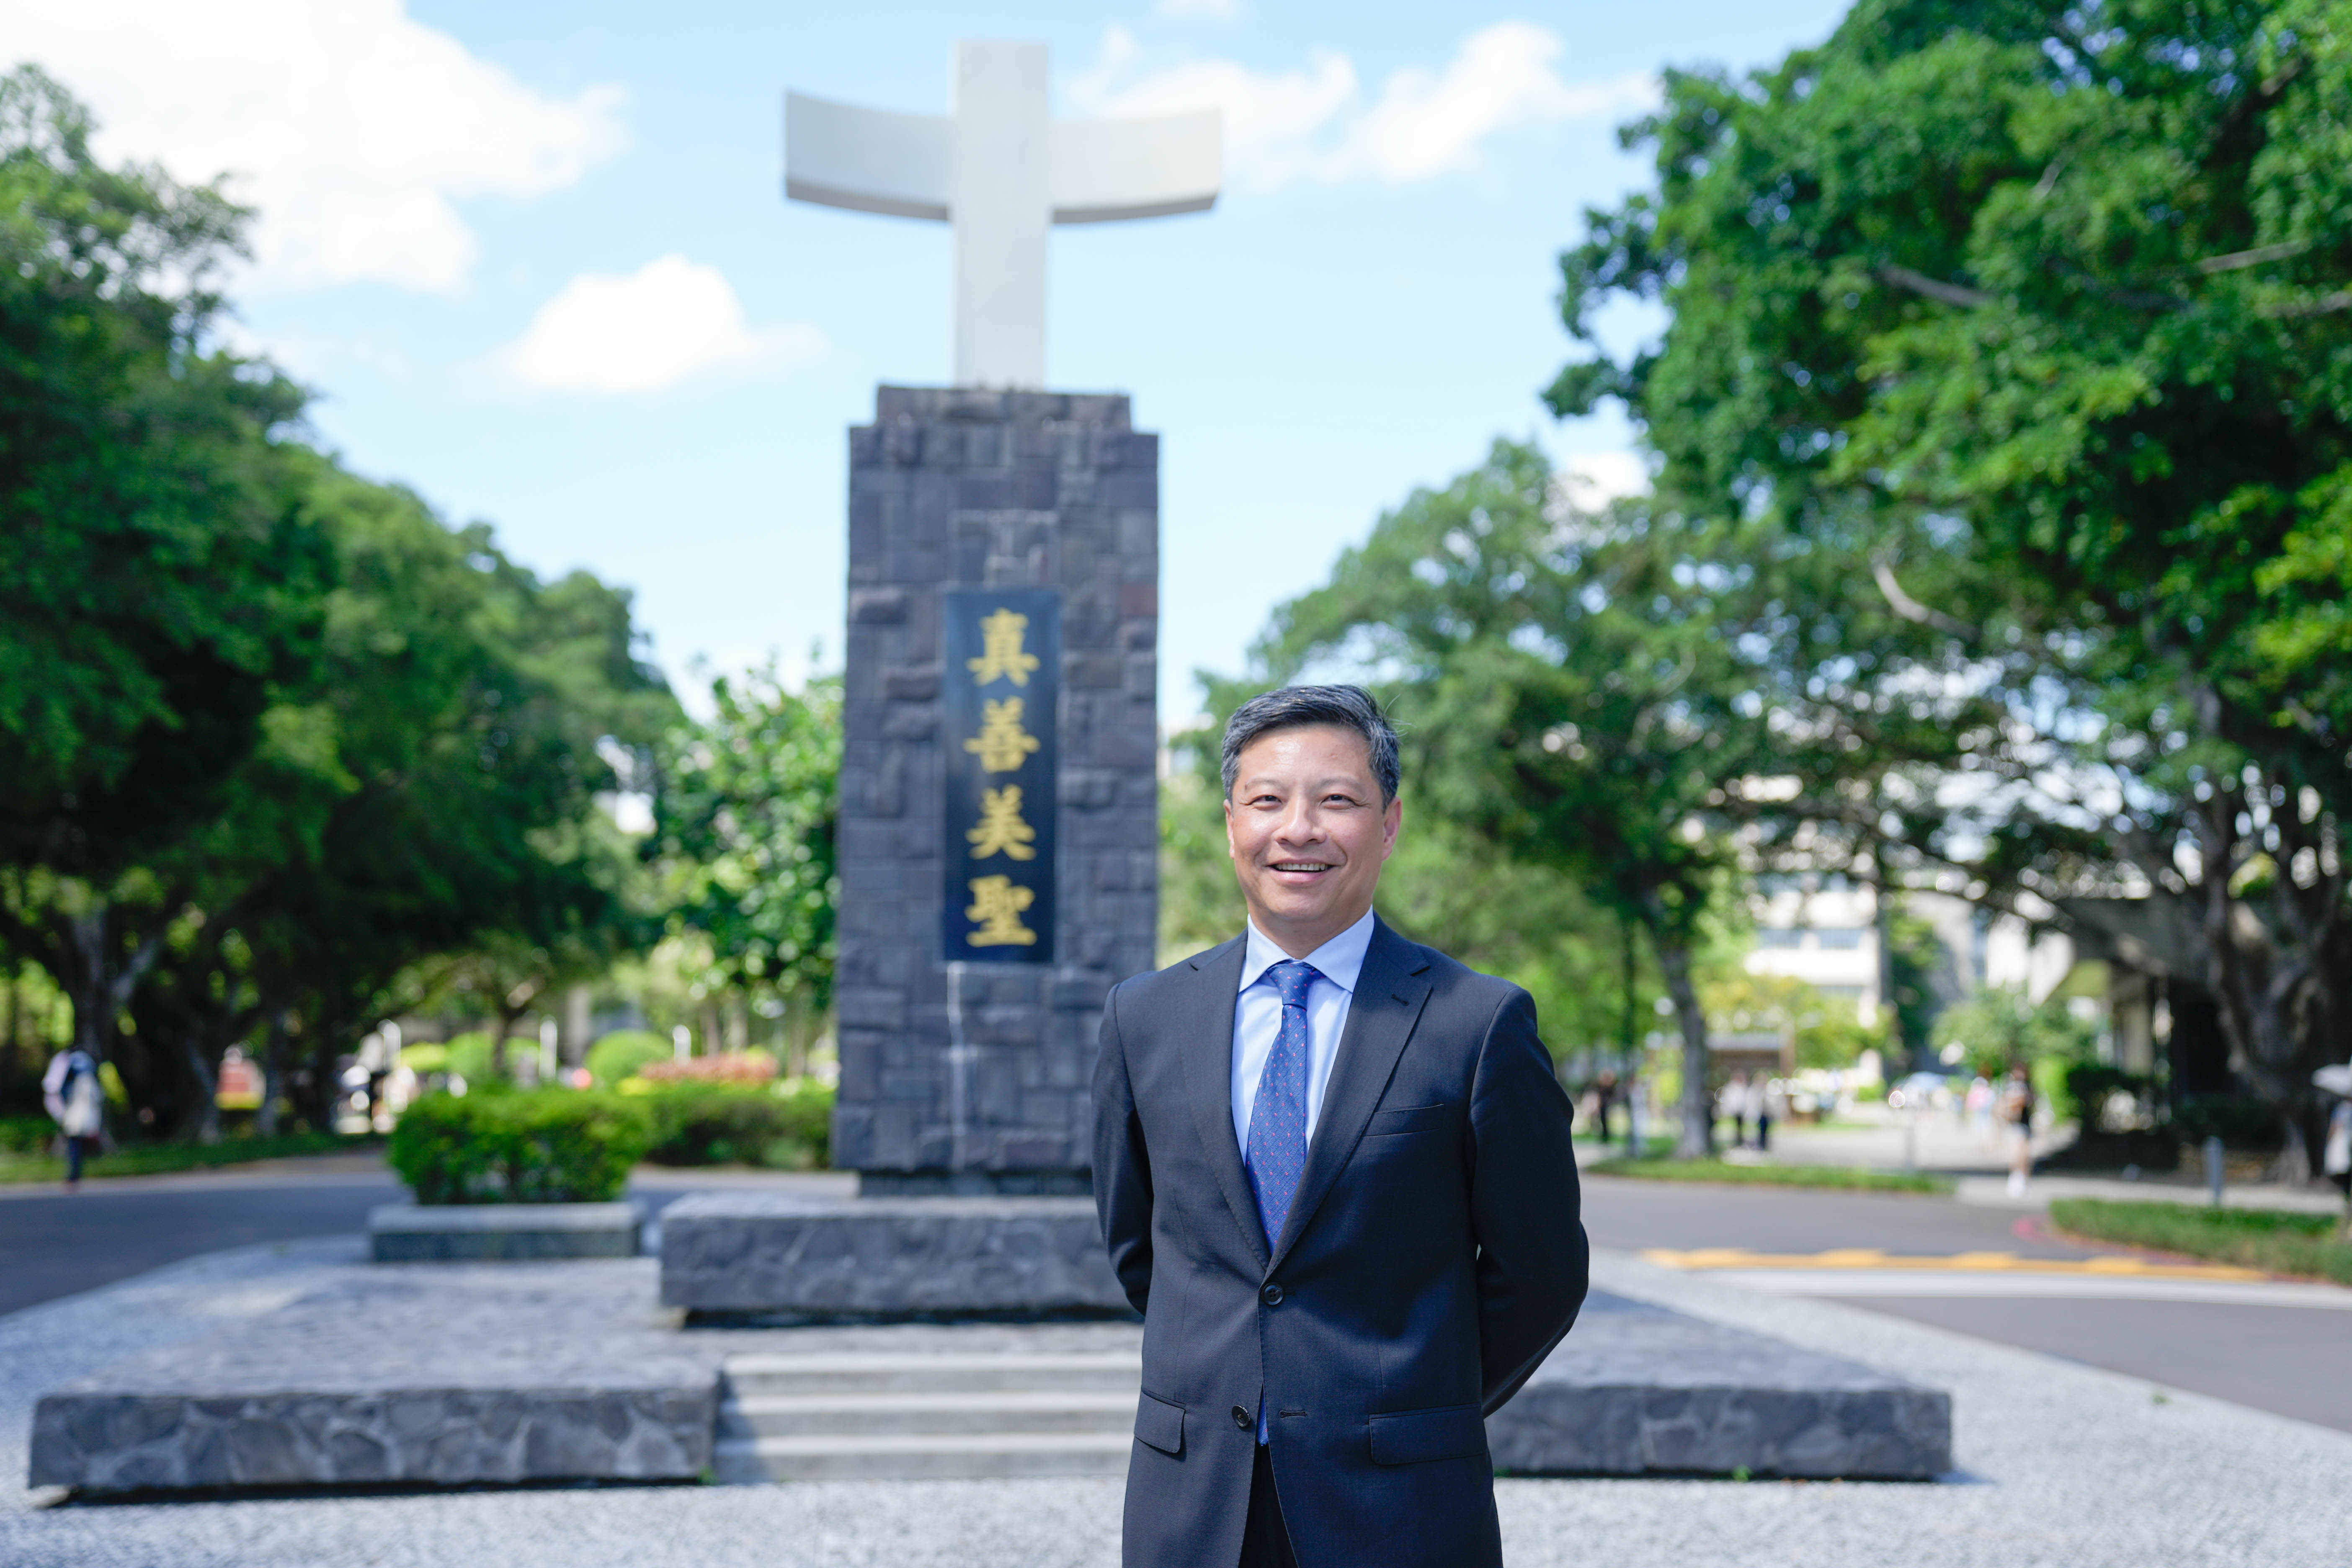 next President: Vice President of Western Sydney Univ. Dr. Lan Yi-chen selected